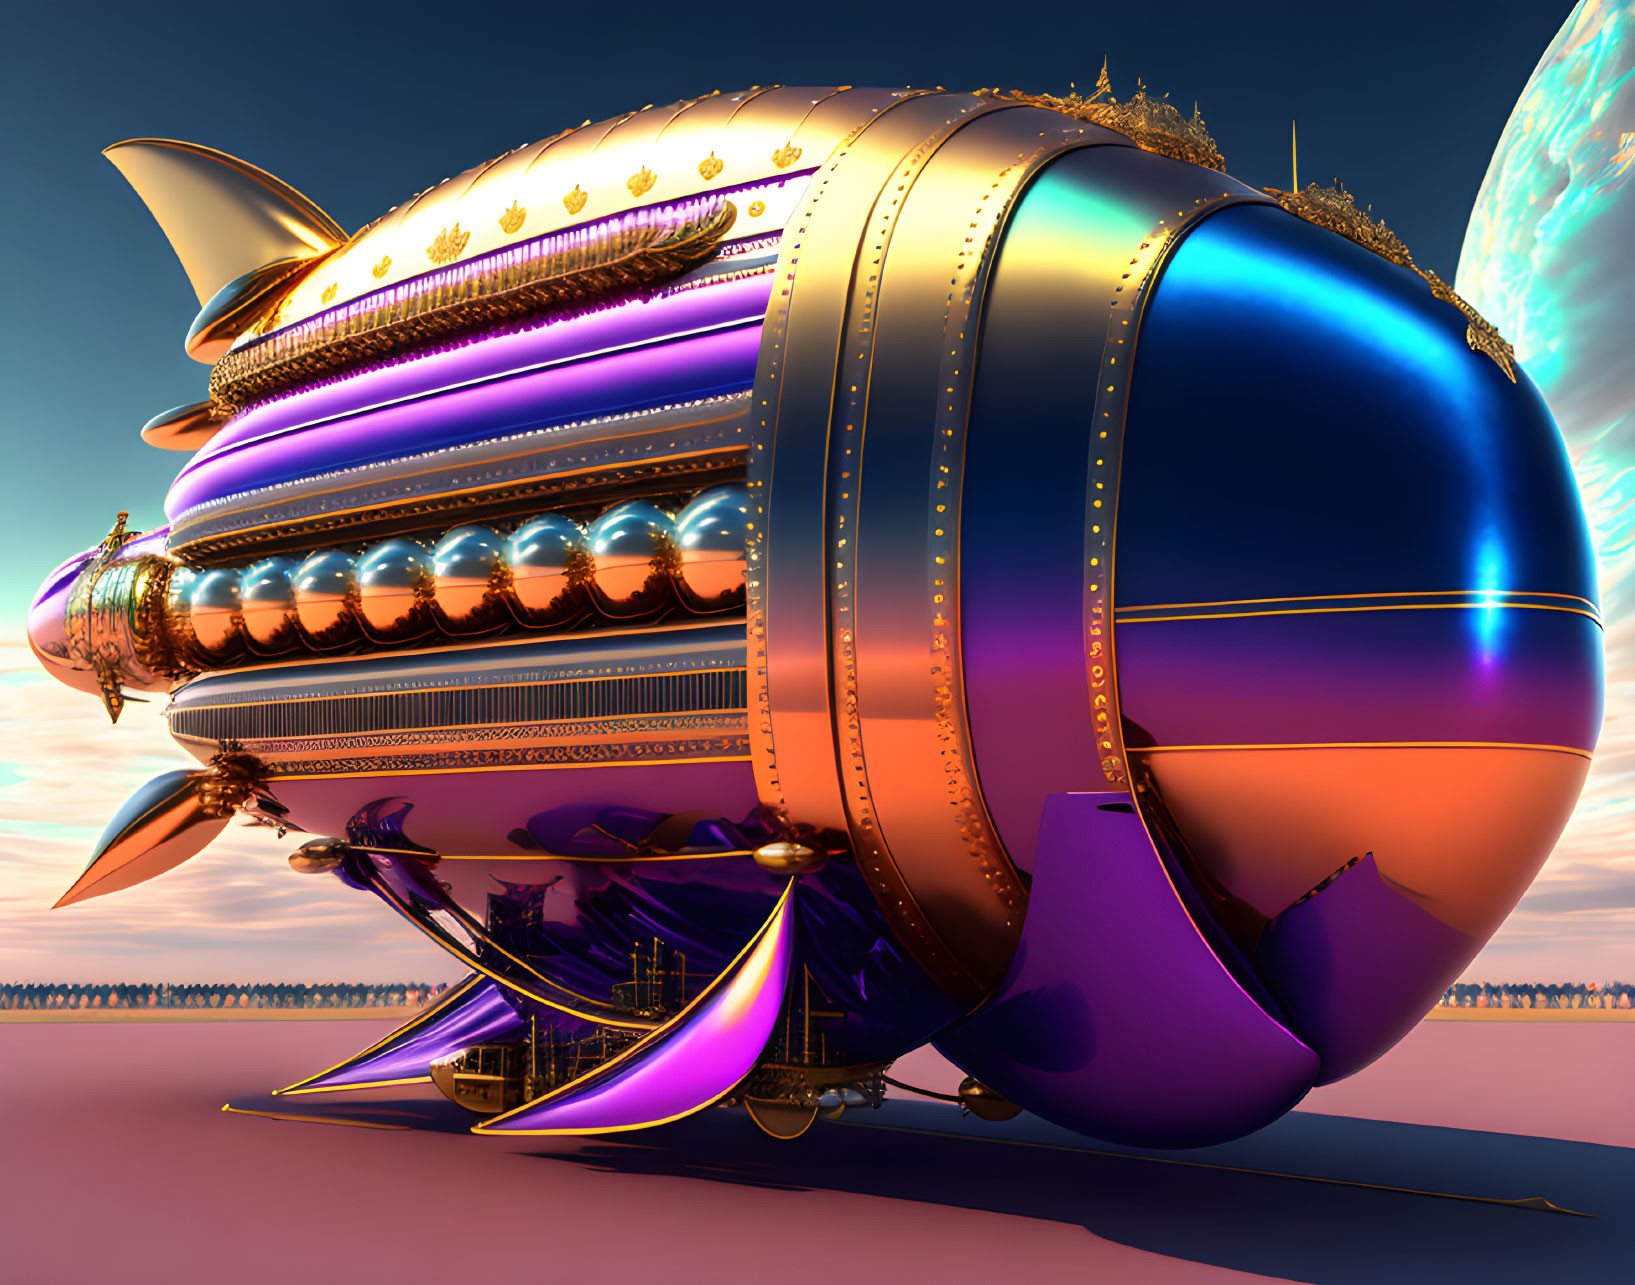 Futuristic airship with metallic colors